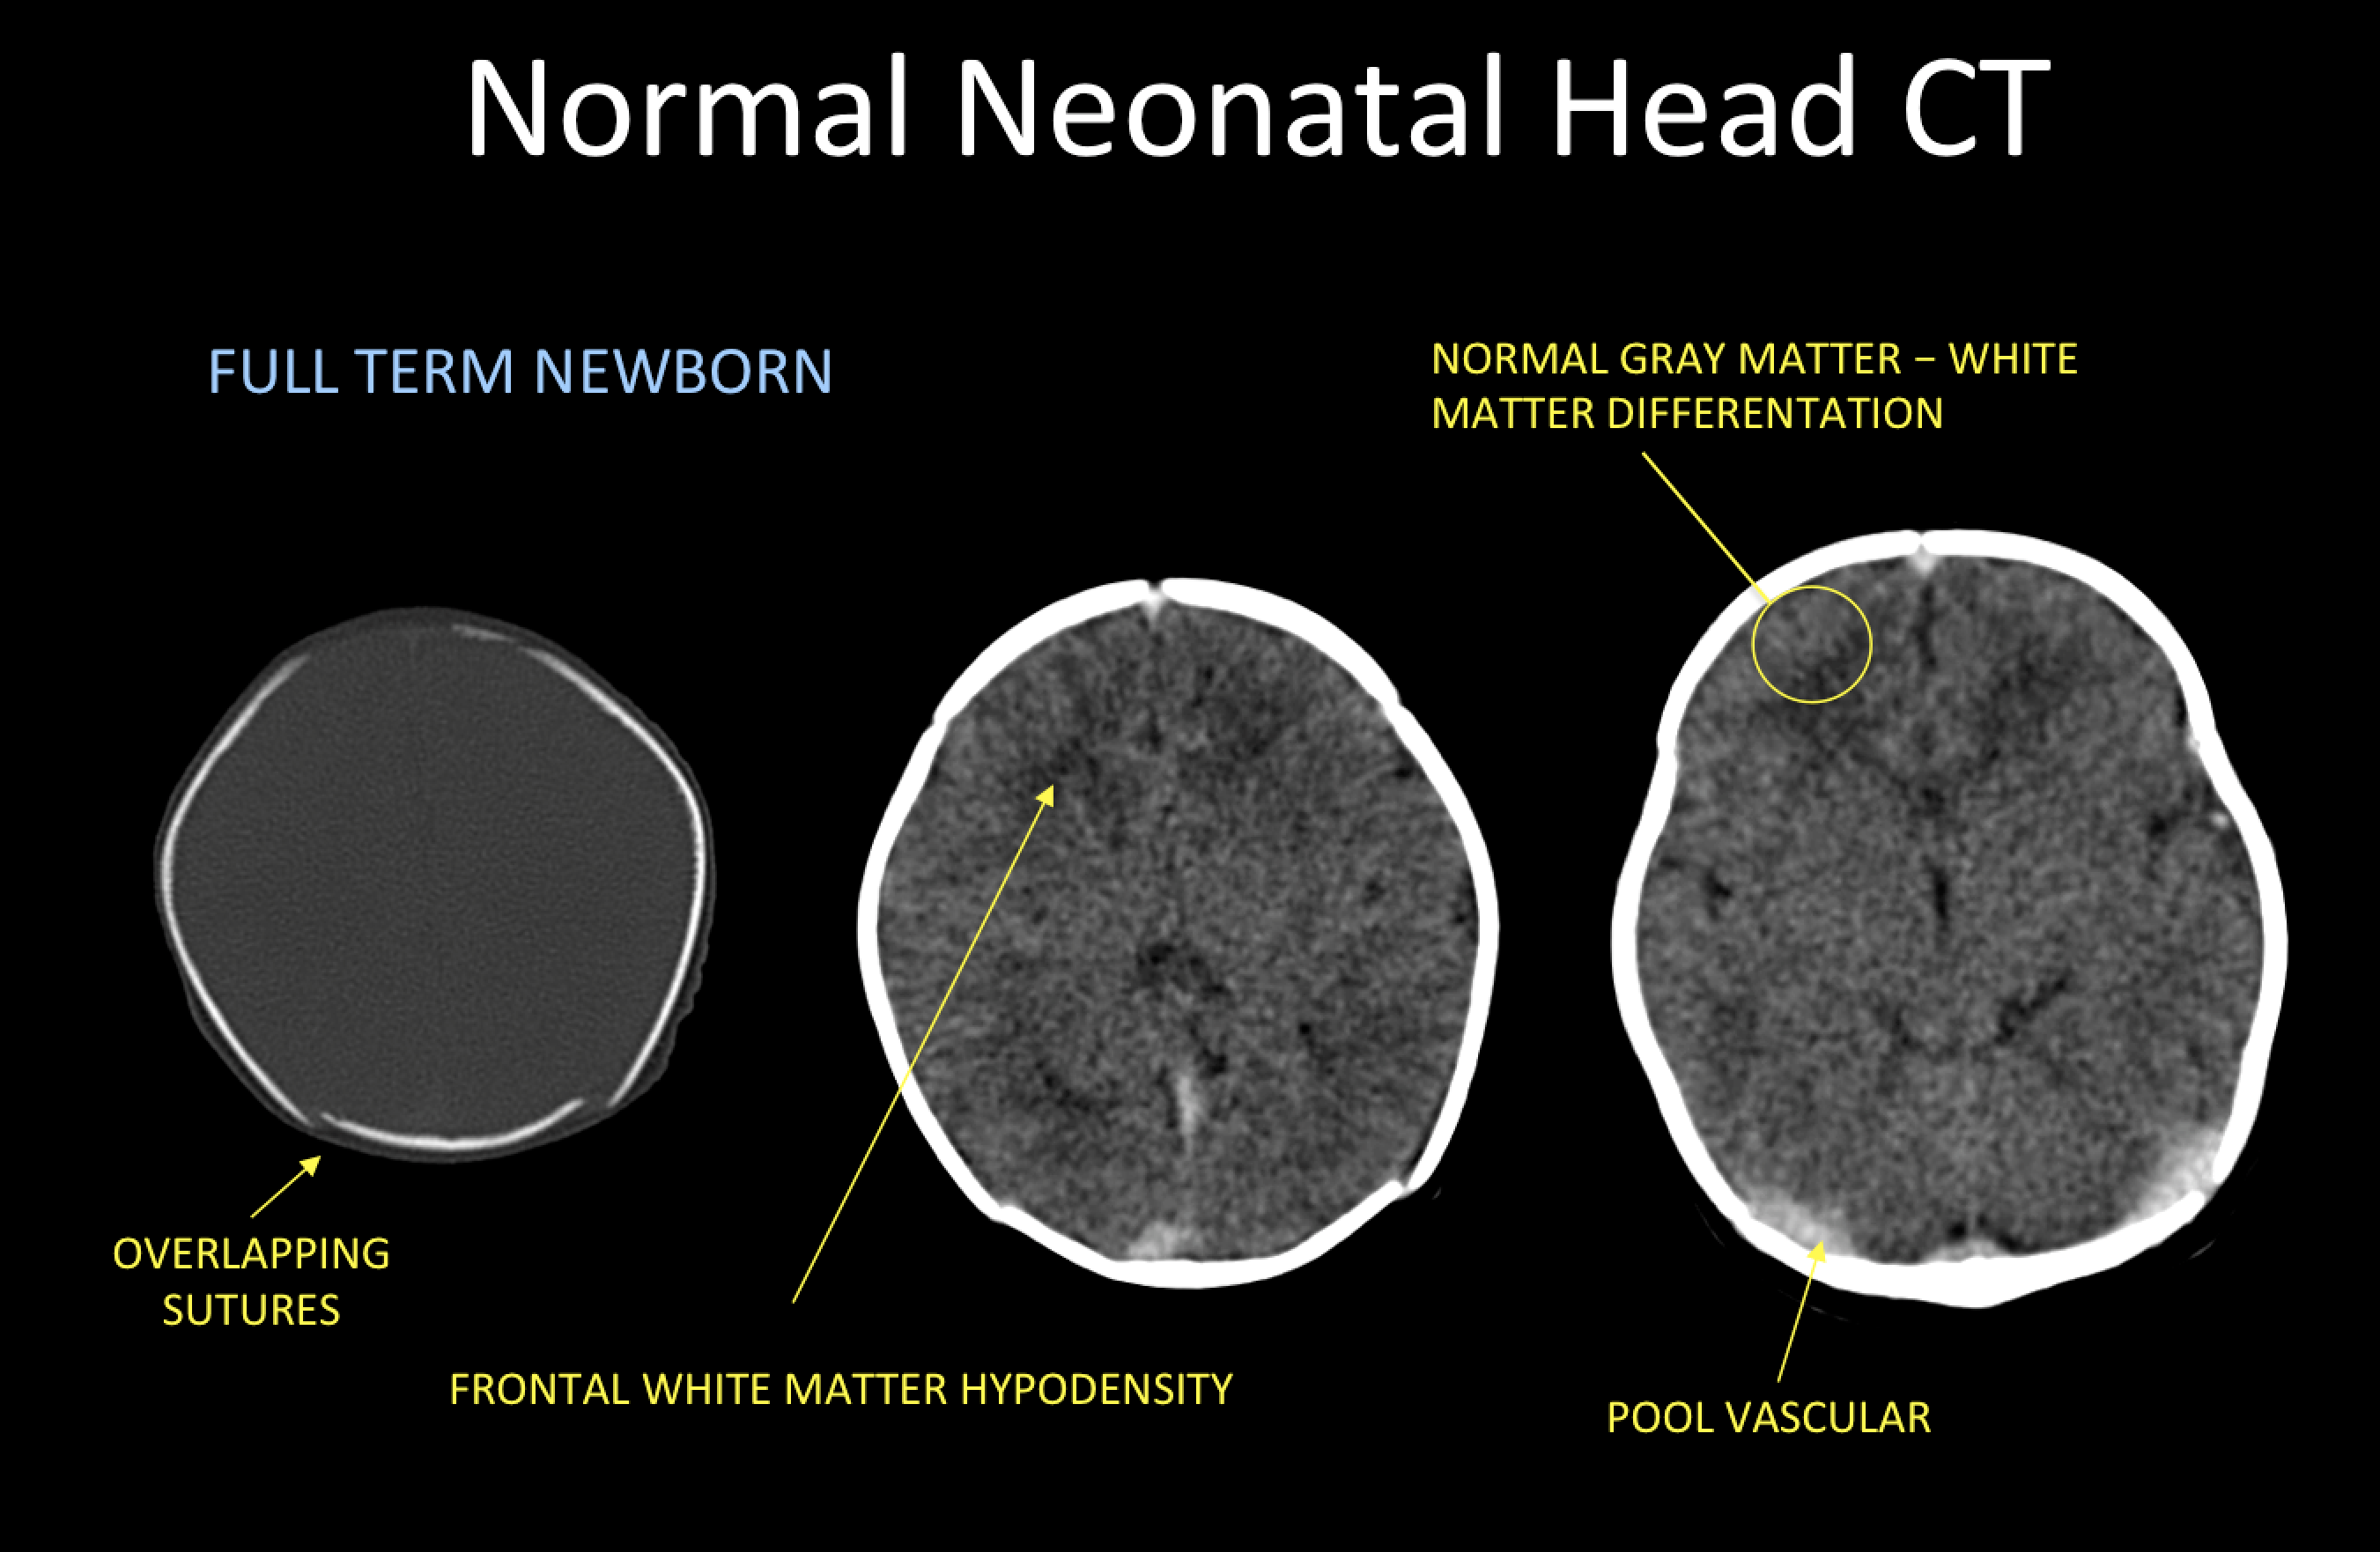 Normal Ct Brain